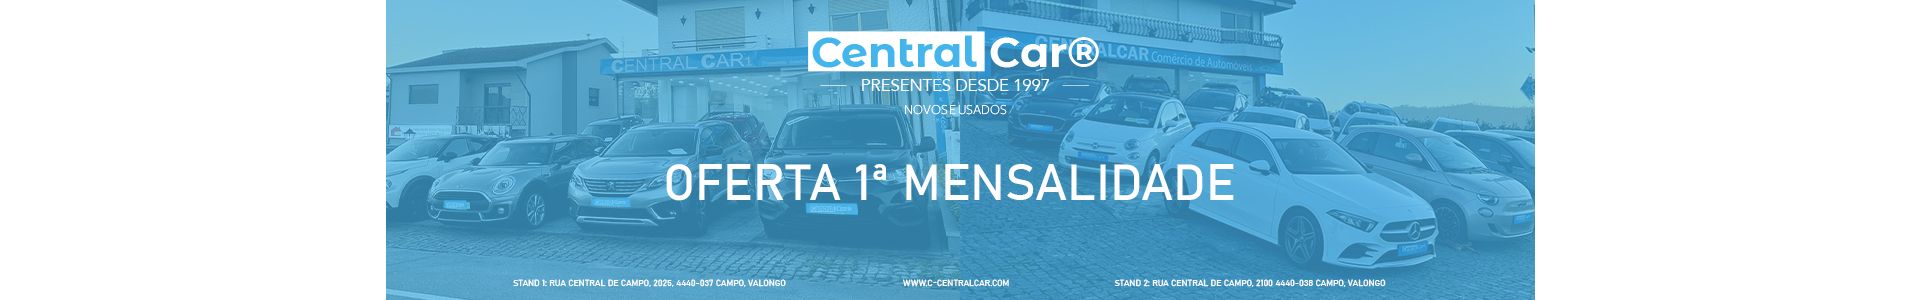 CentralCar® top banner